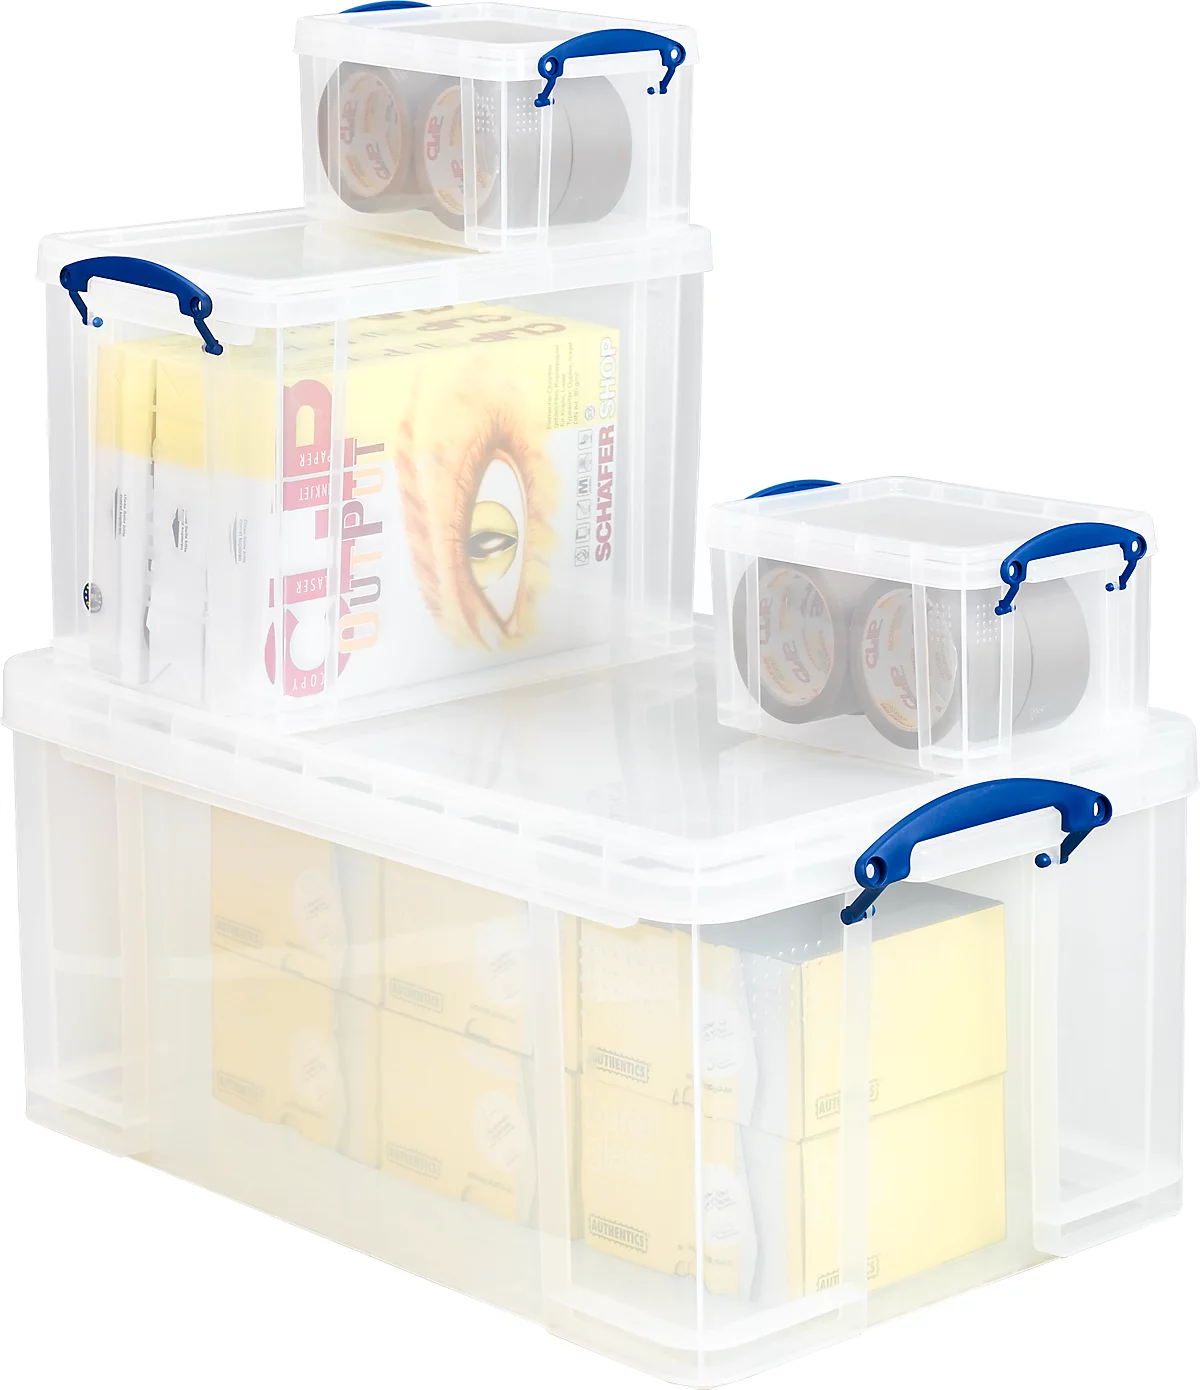 Transportbox Really Useful Box, Volumen 19 l, L 395 x B 255 x H 290 mm, stapelbar, mit Deckel & Klappgriffen, Recycling-PP, transparent